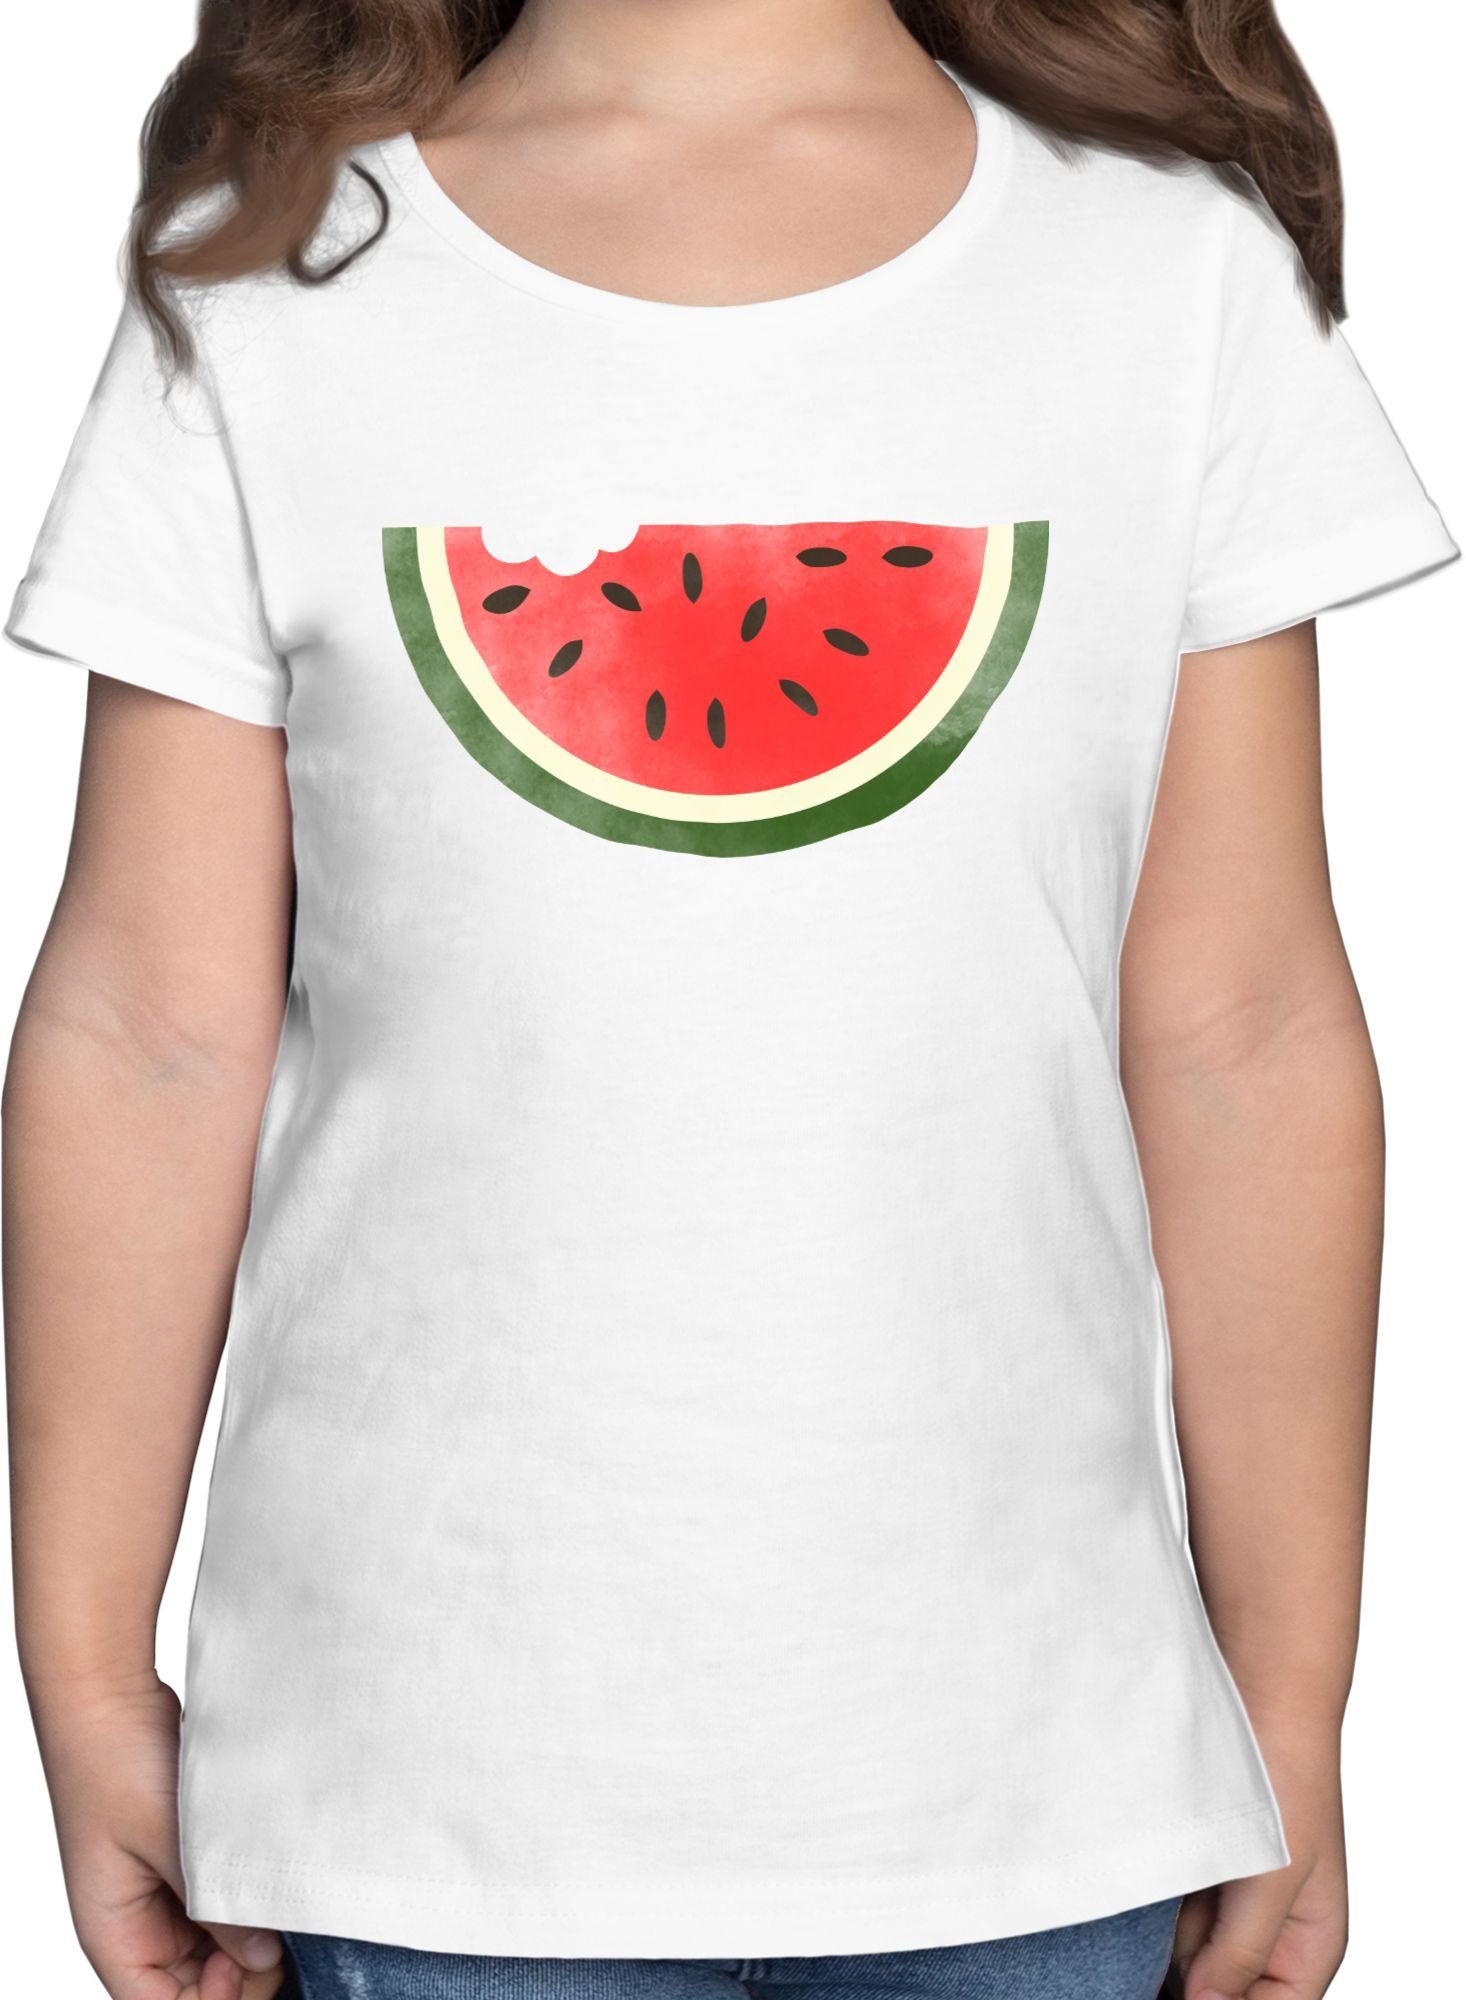 Shirtracer T-Shirt Wassermelone Wasserfarbe - Kindermotive - Mädchen Kinder  T-Shirt tshirt kinder wassermelone - watermelon shirt - melone